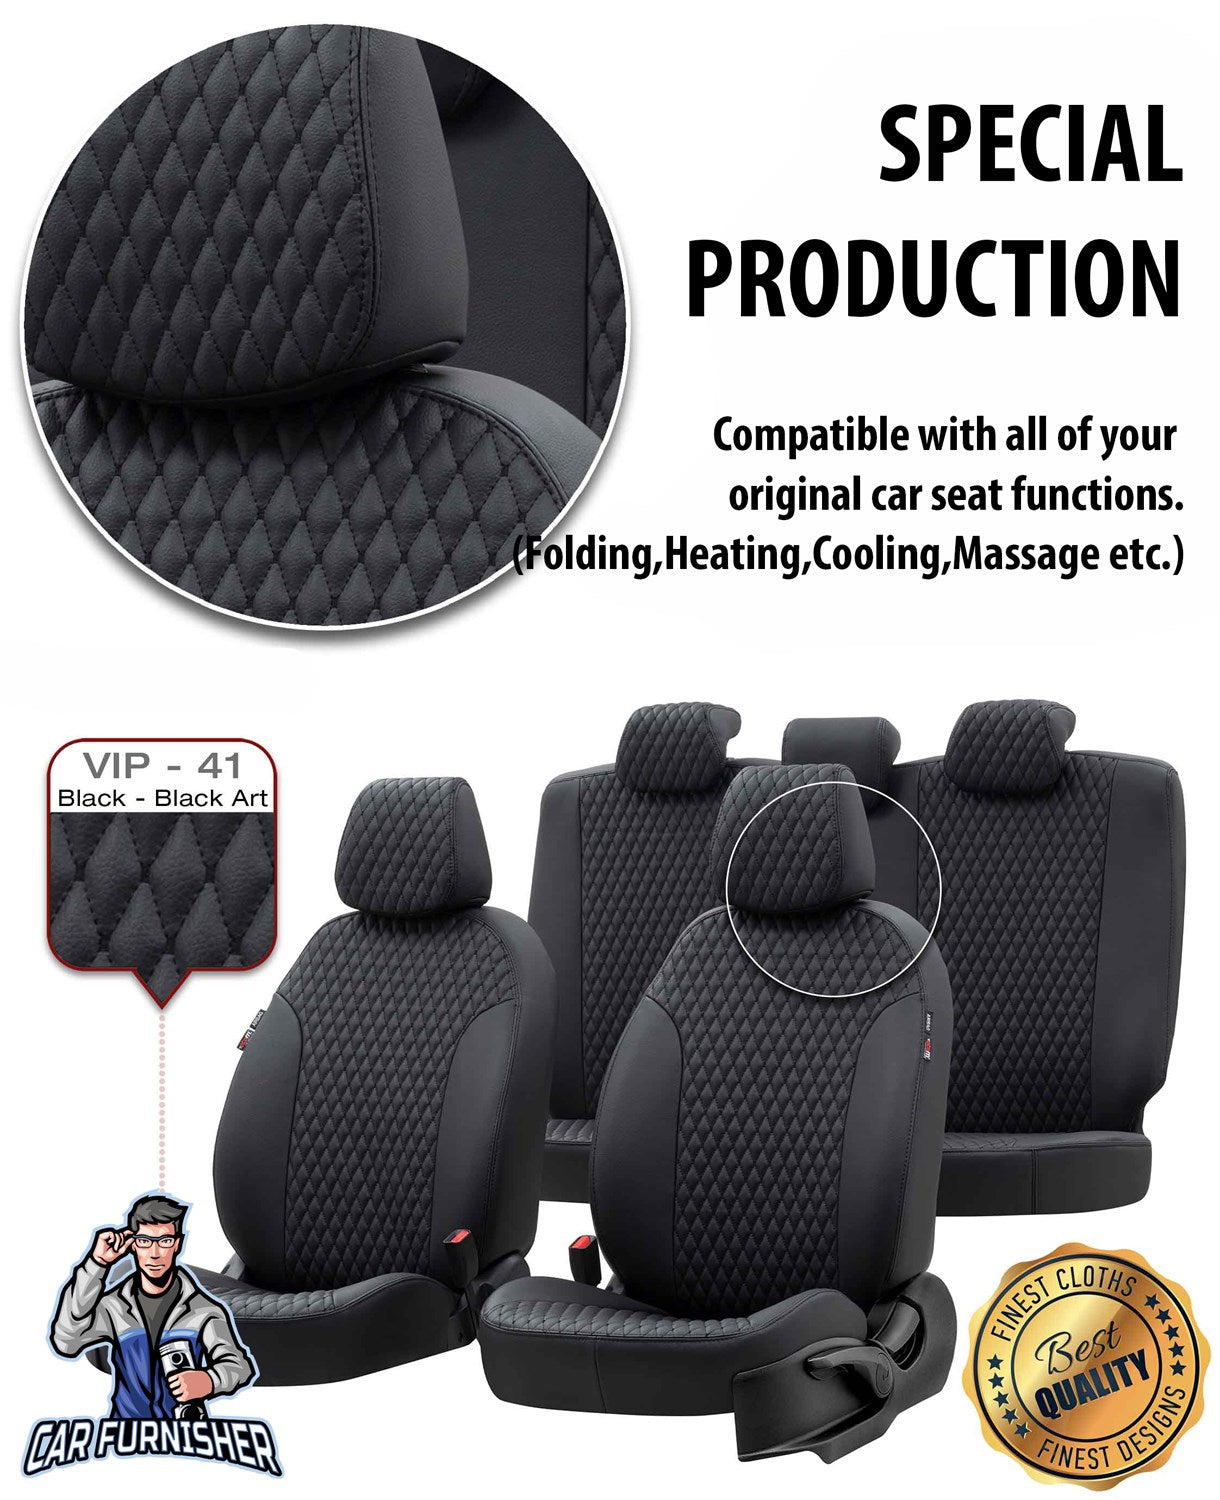 Mitsubishi Spacestar Seat Cover Amsterdam Leather Design Black Leather